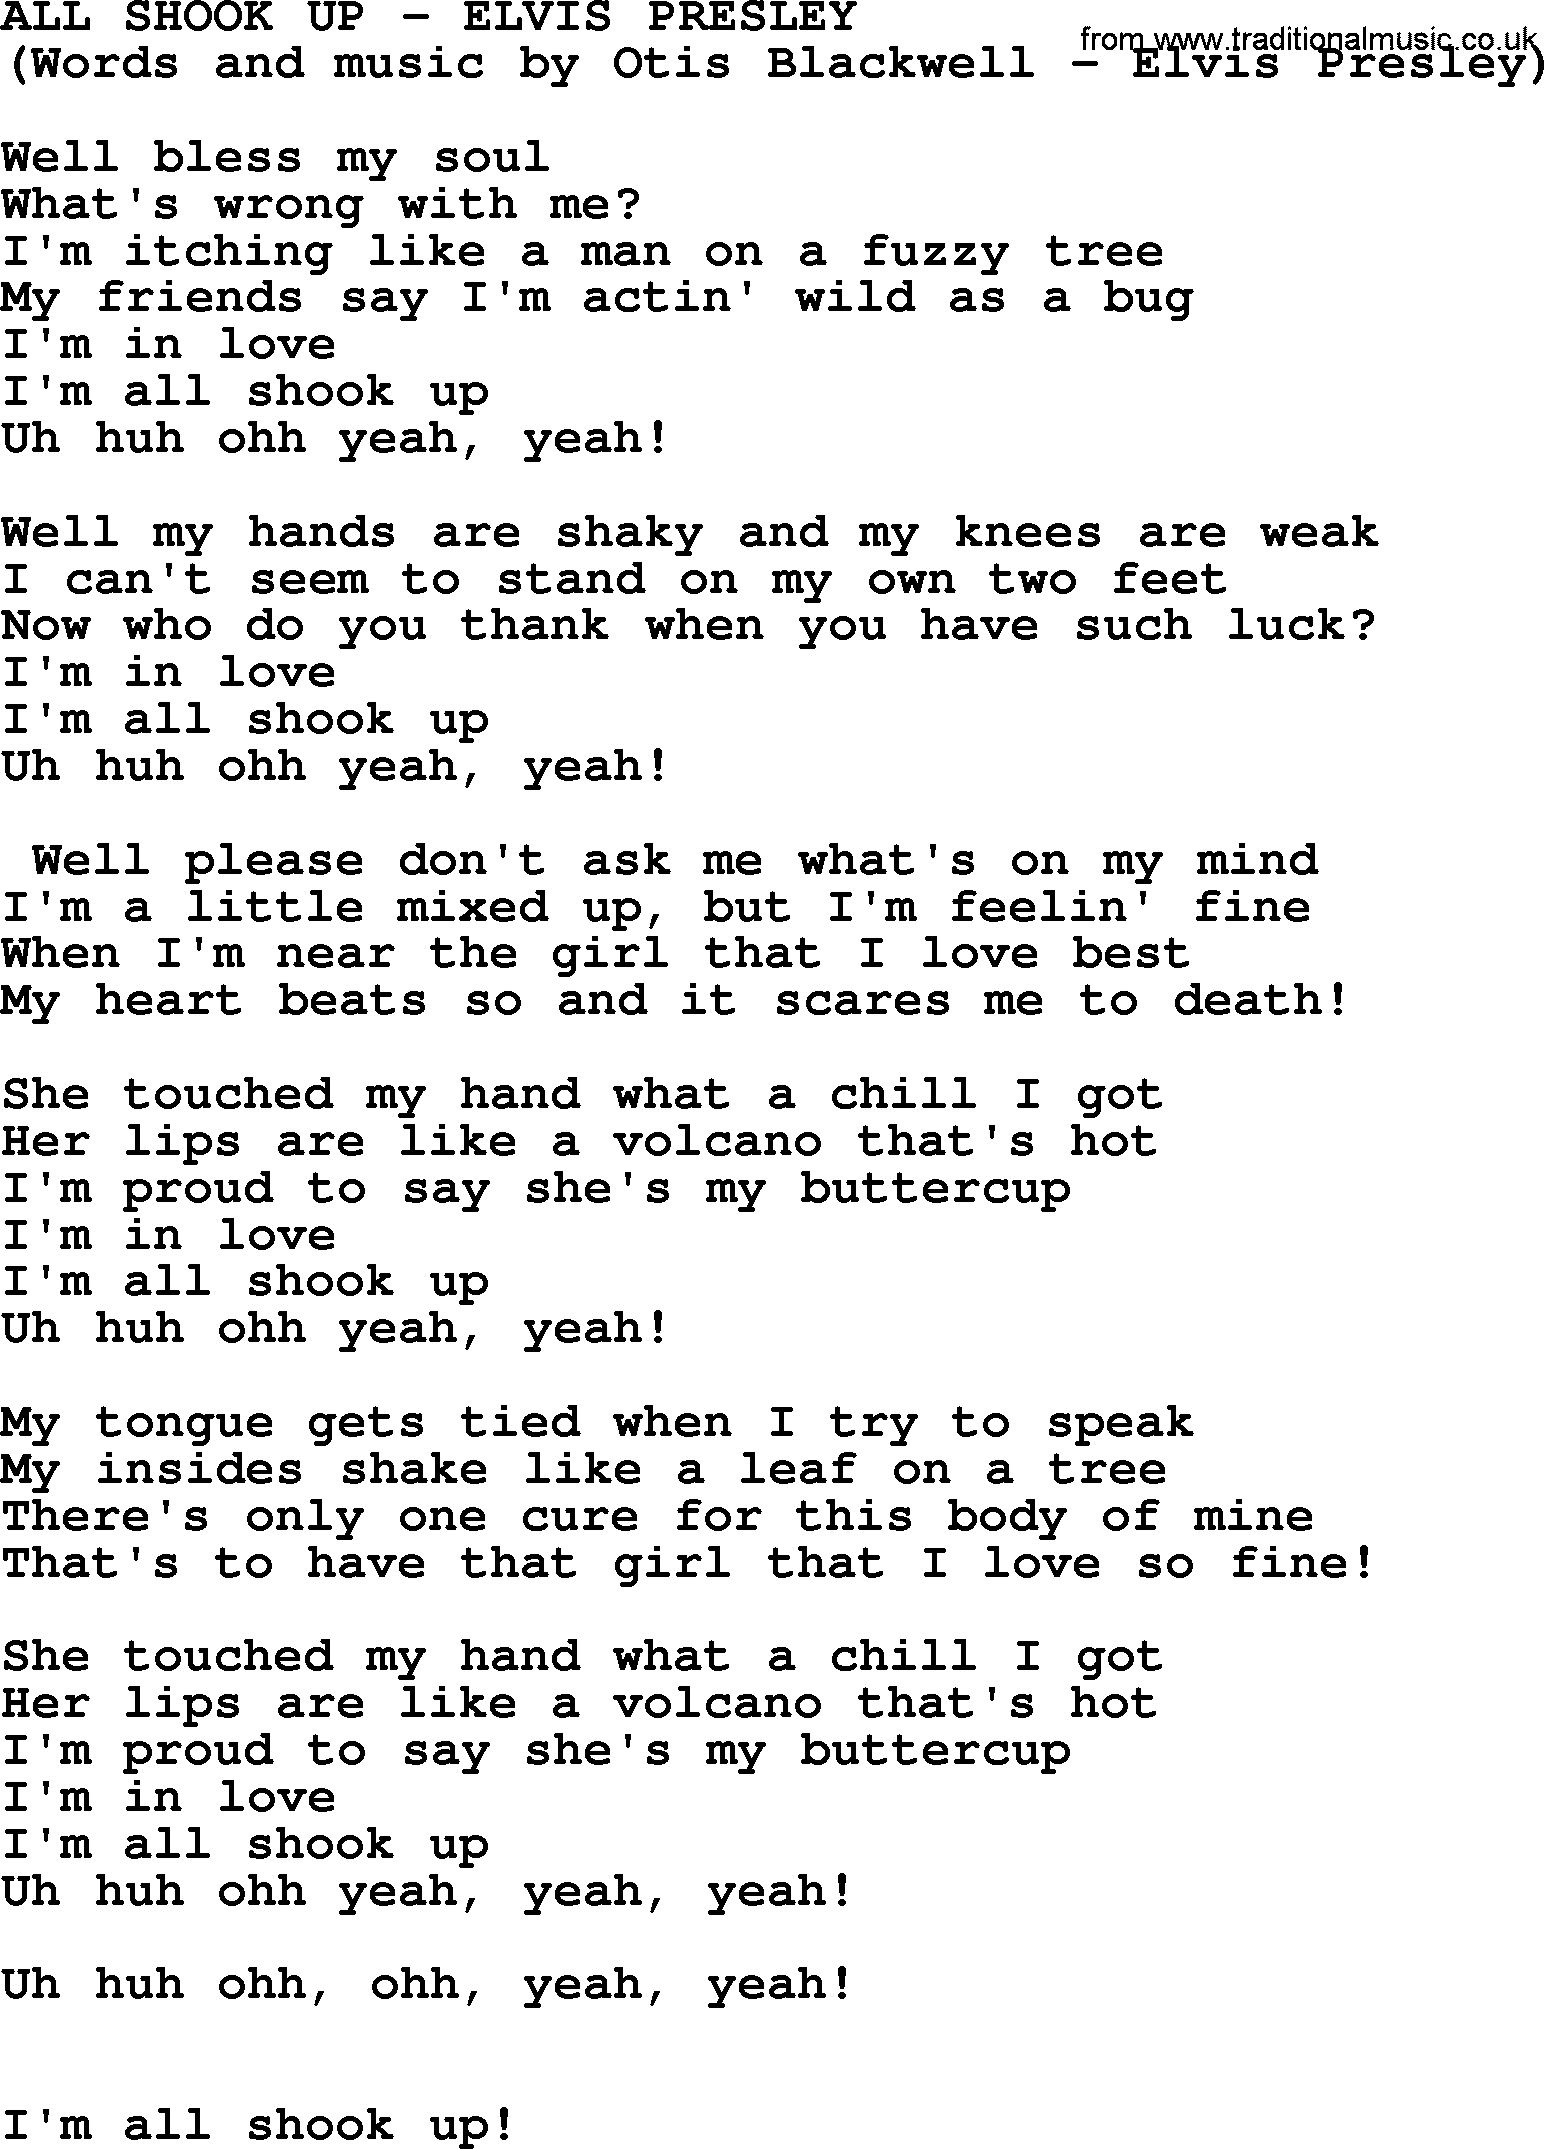 Elvis Presley song: All Shook Up lyrics